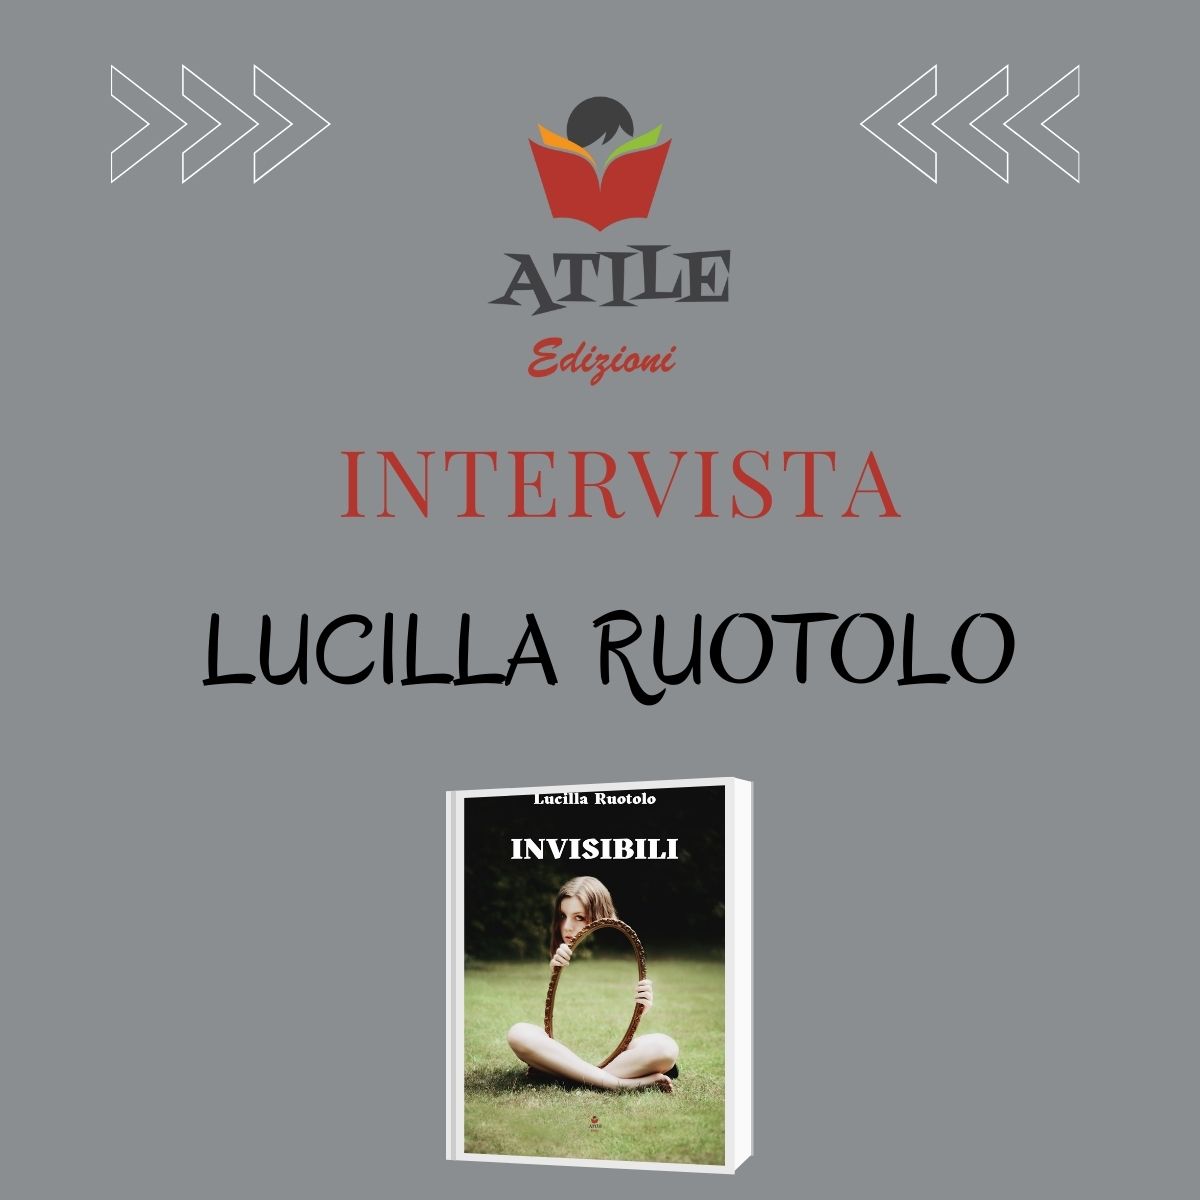 INTERVISTA LUCILLA RUOTOLO